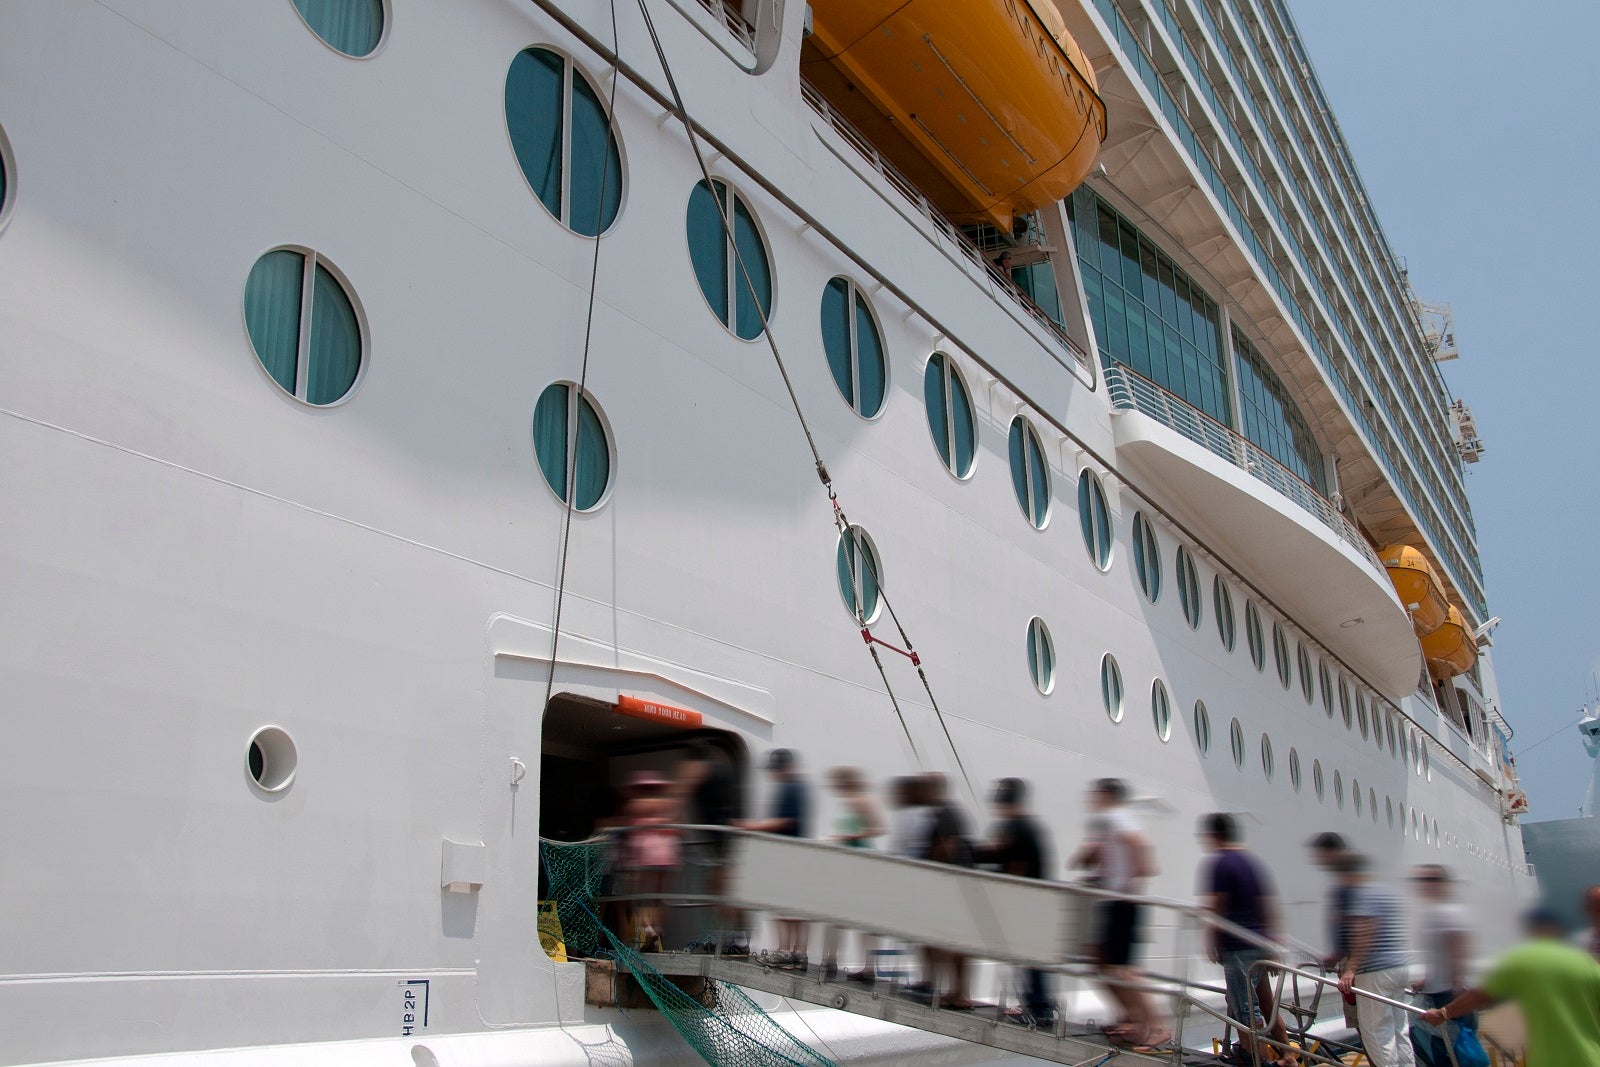 rooms on board a cruise ship codycross